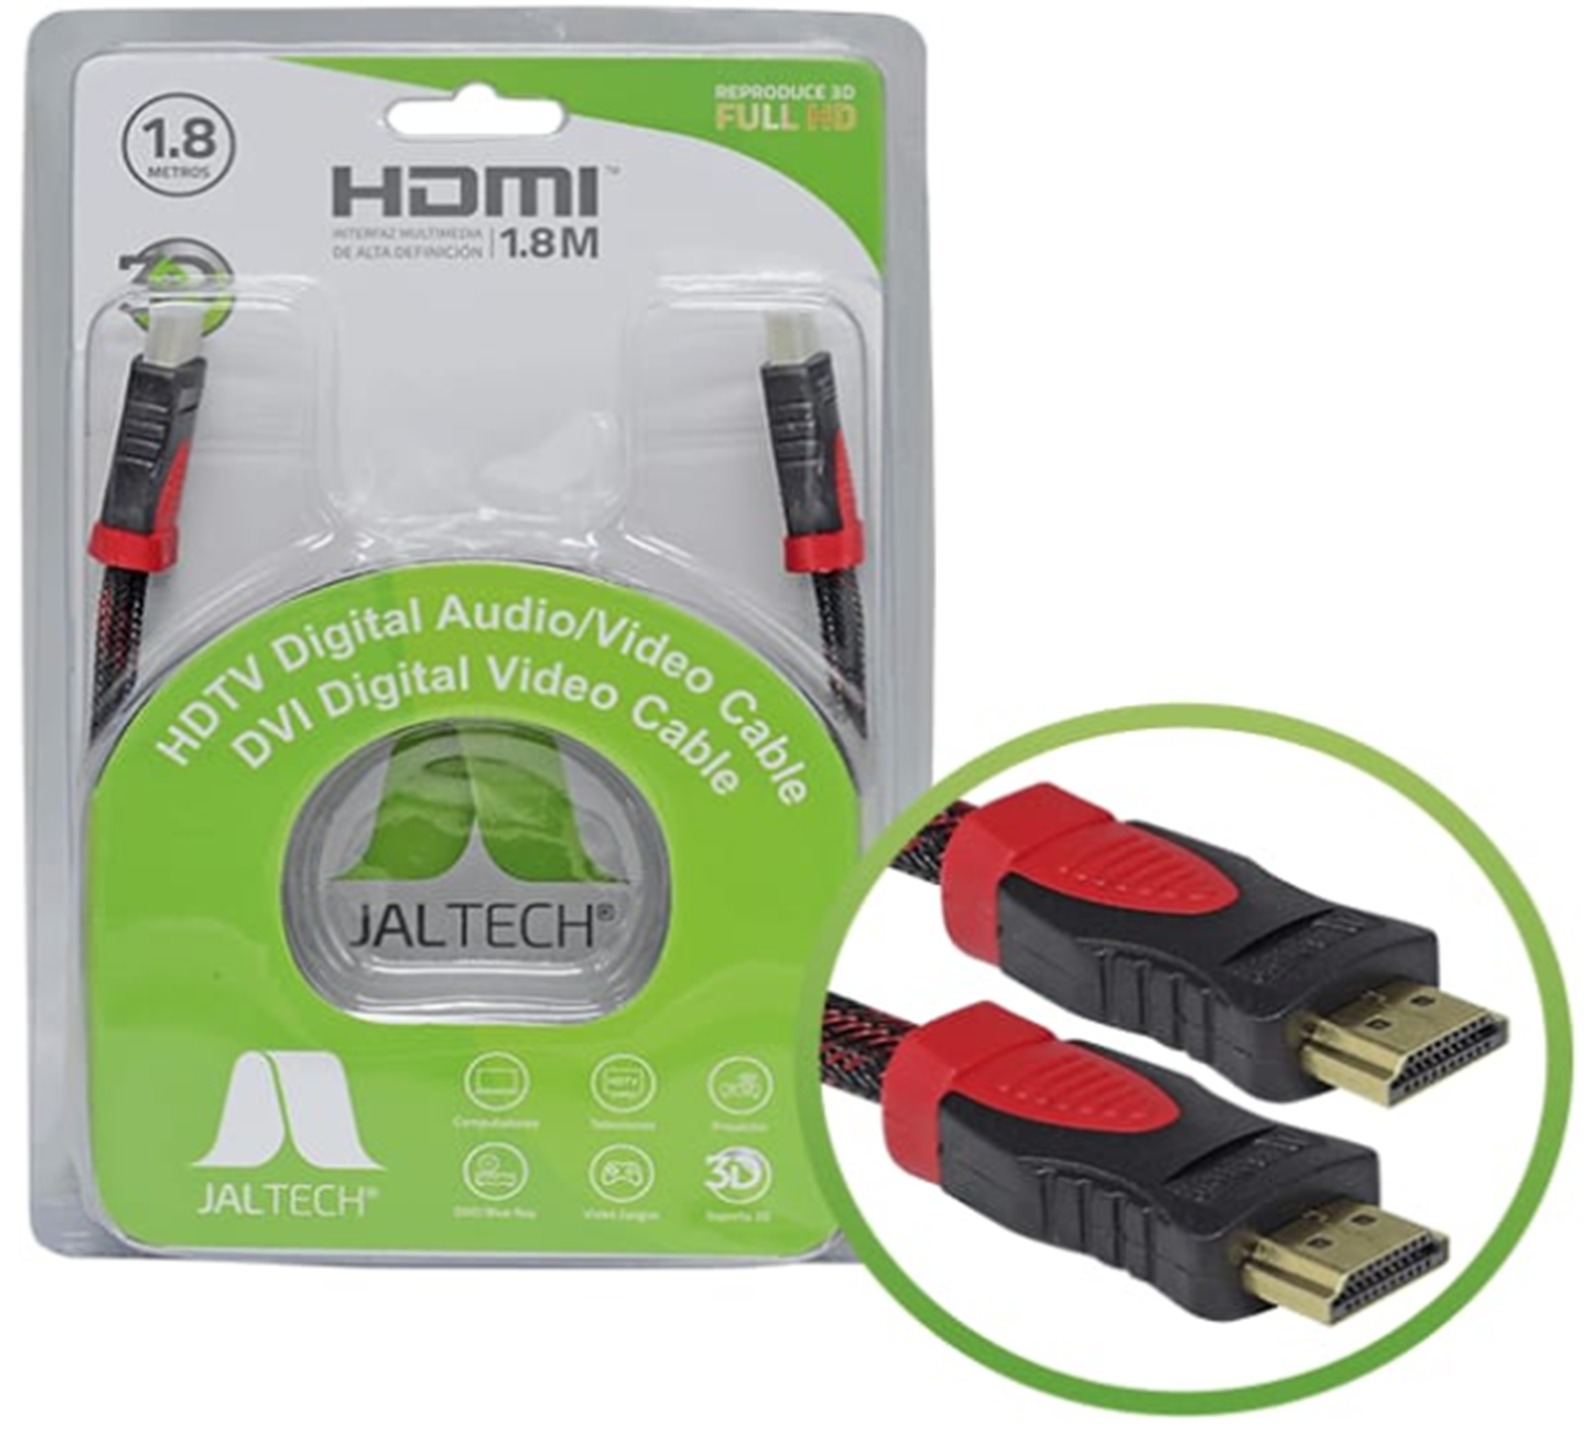 Cable HDMI 1.8M JAL TECH